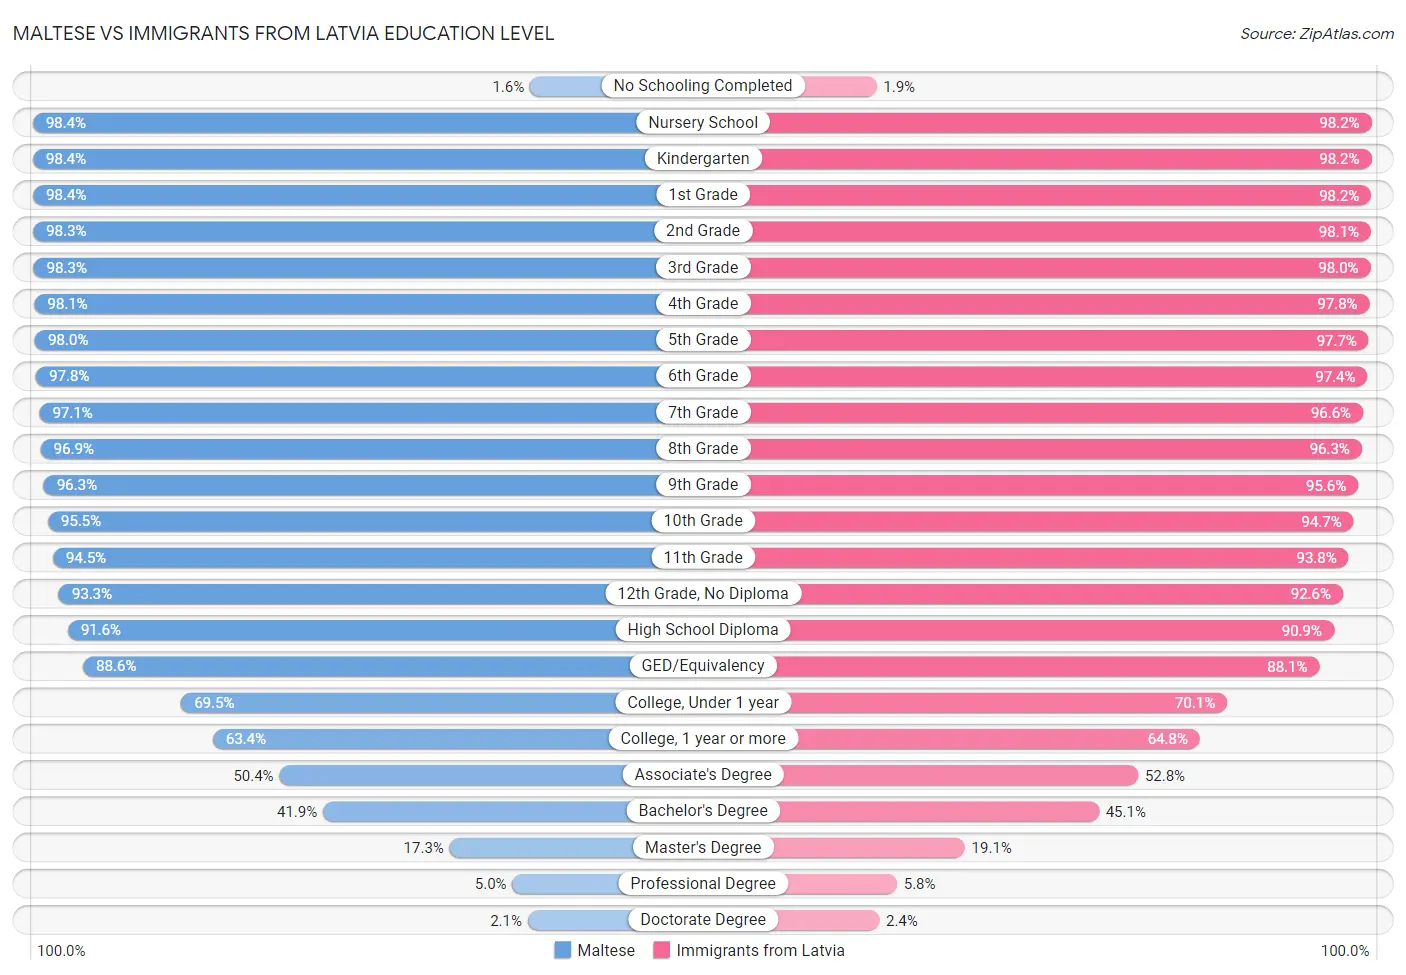 Maltese vs Immigrants from Latvia Education Level